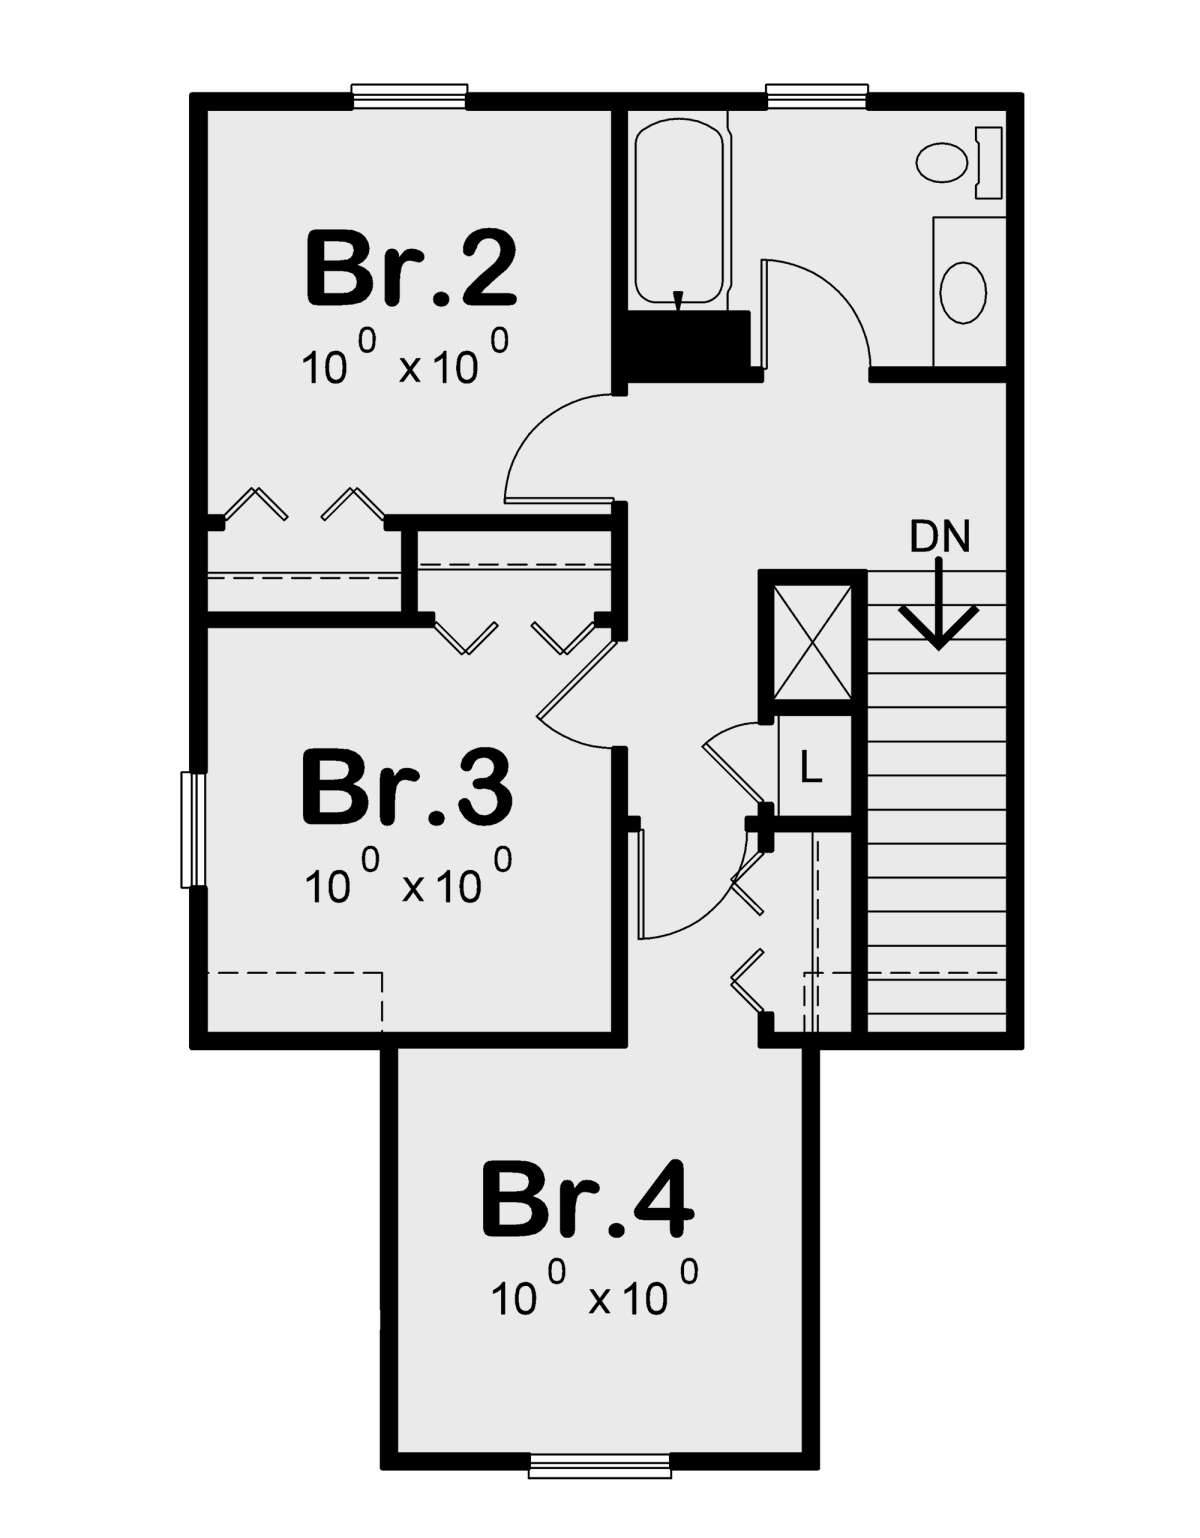 Craftsman Plan: 1,554 Square Feet, Bedrooms, 2.5 Bathrooms 402-01654